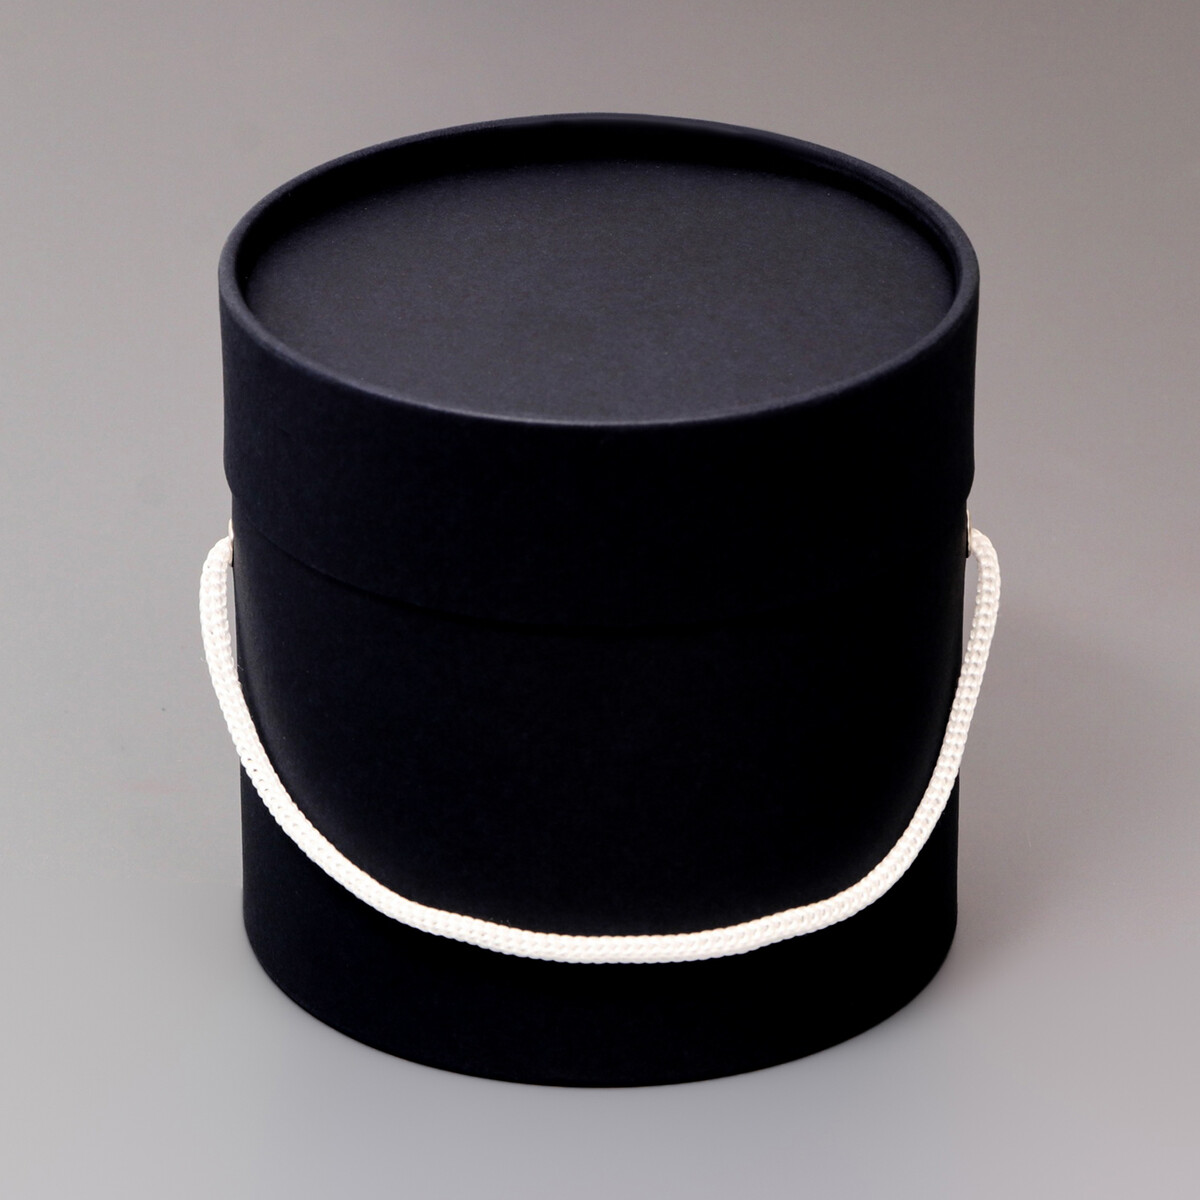 Подарочная коробка, круглая, черная,с шнурком, 12 х 12 см подарочная коробка круглая